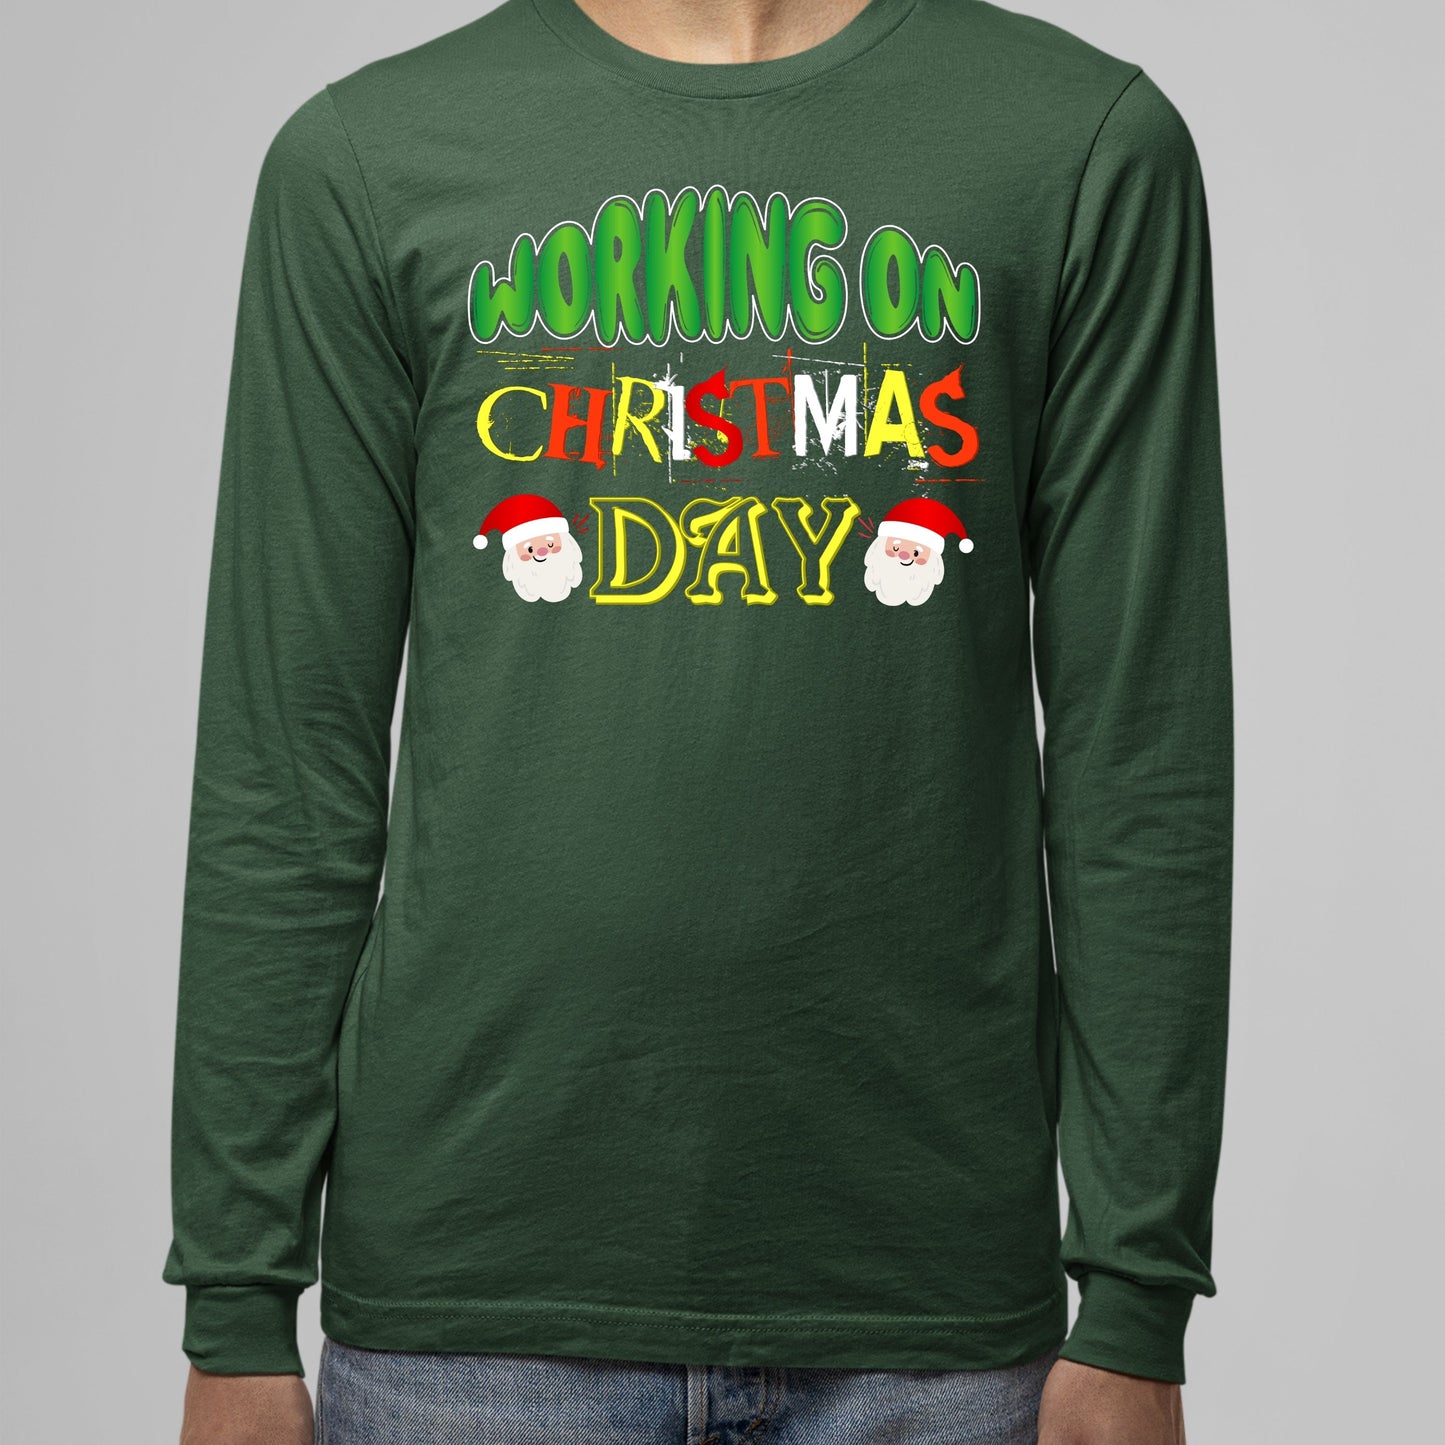 Working on Chirstmas day , Doctor Shirt,  School TShirt, 2022 Christmas, Doctor Gift for Him, Christmas Shirt, Christmas Sweatshirt,